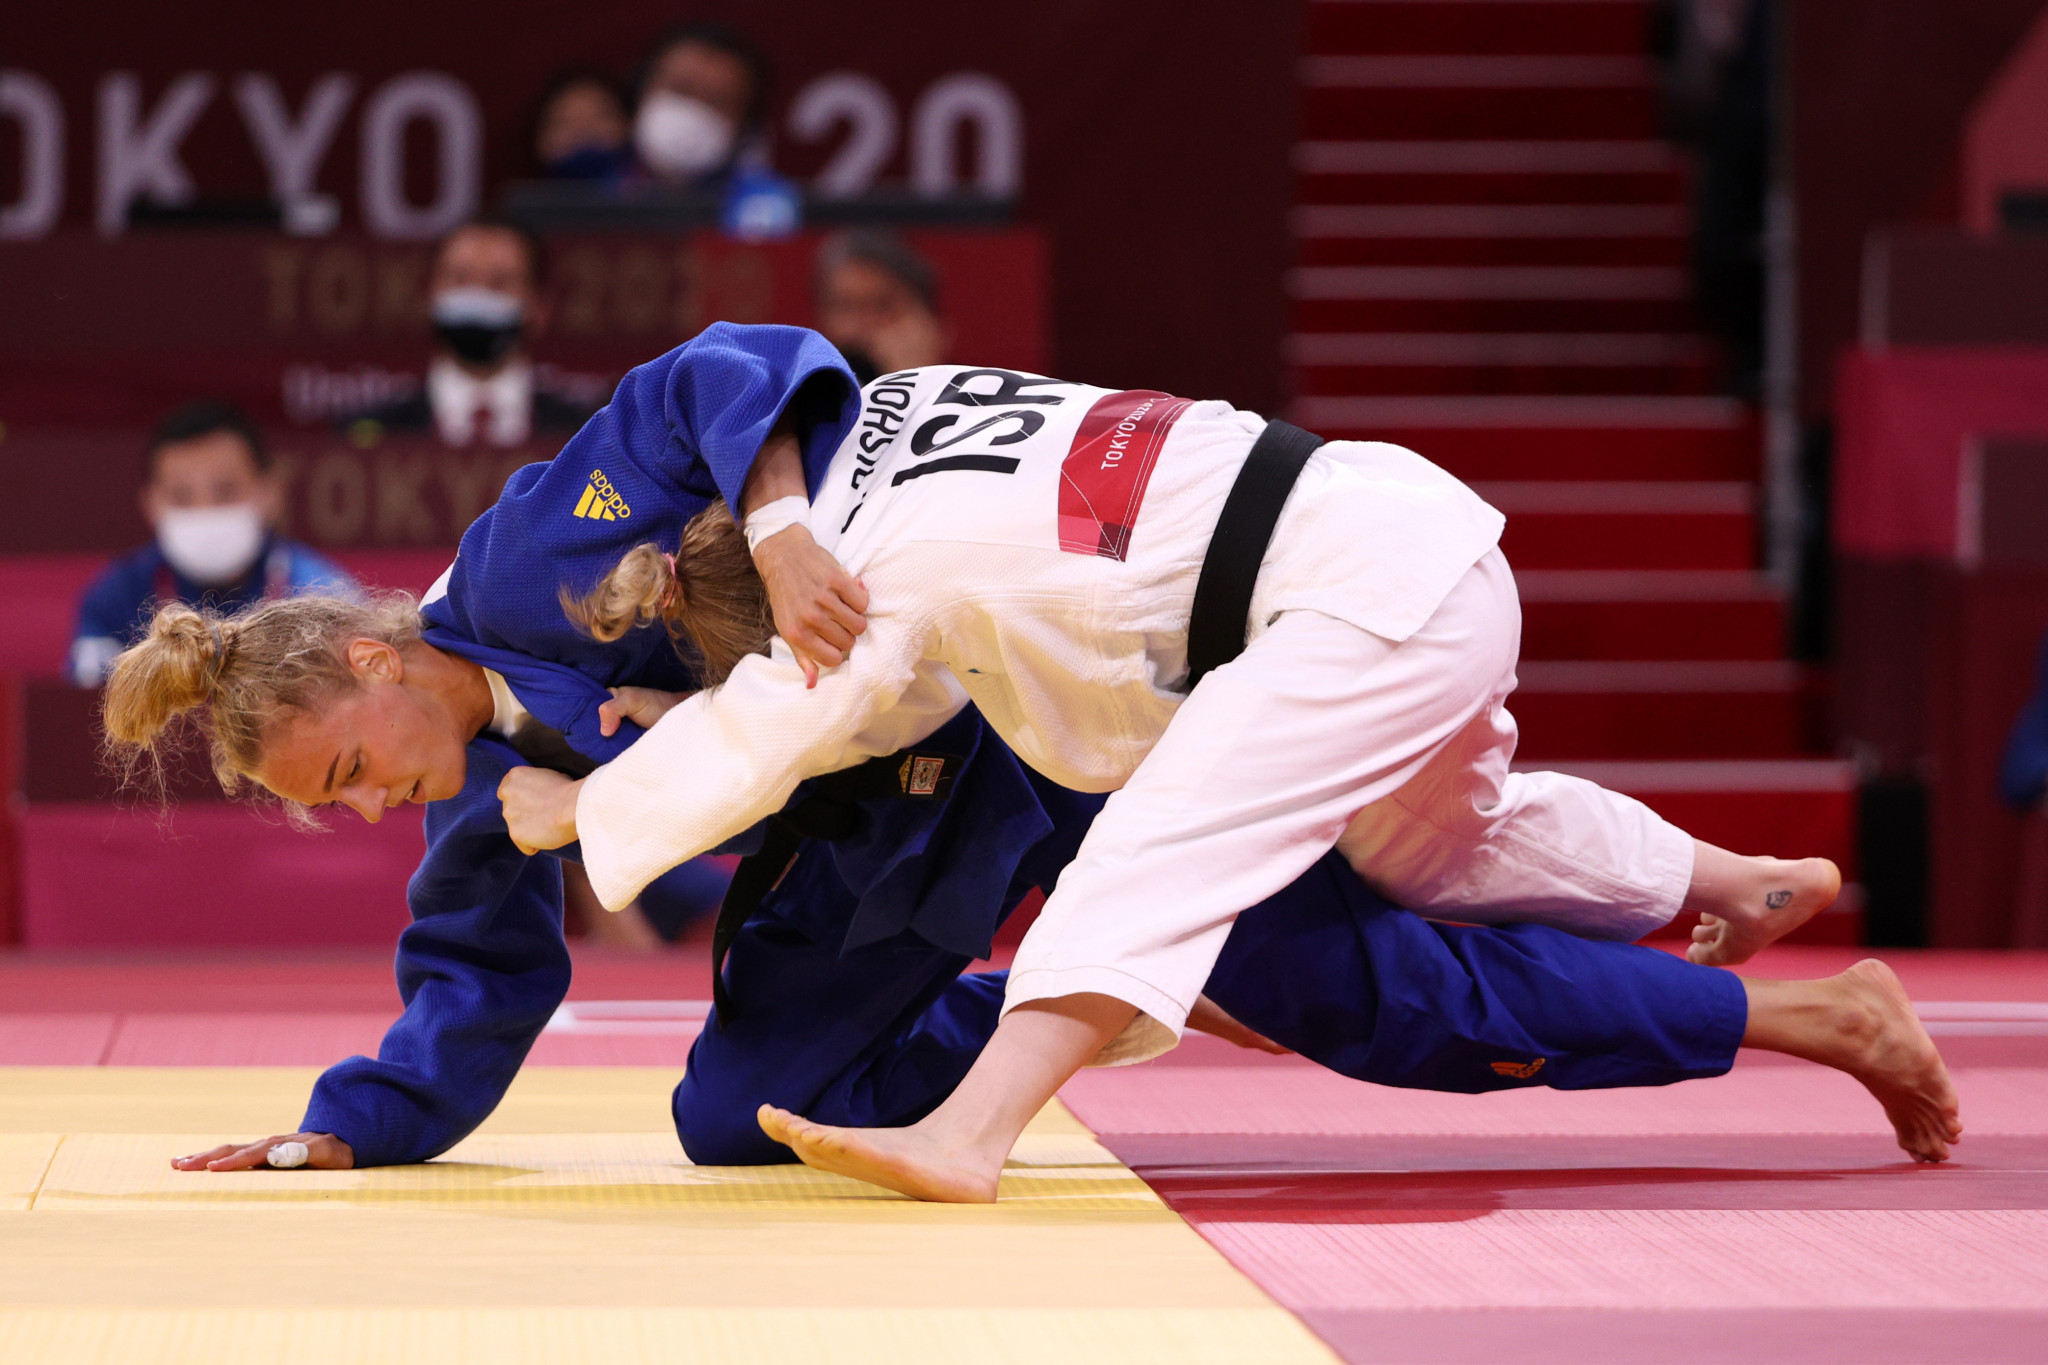 Ukrainian Olympic medallist Bilodid among judoka vying for gold at European Judo Championships in Sofia